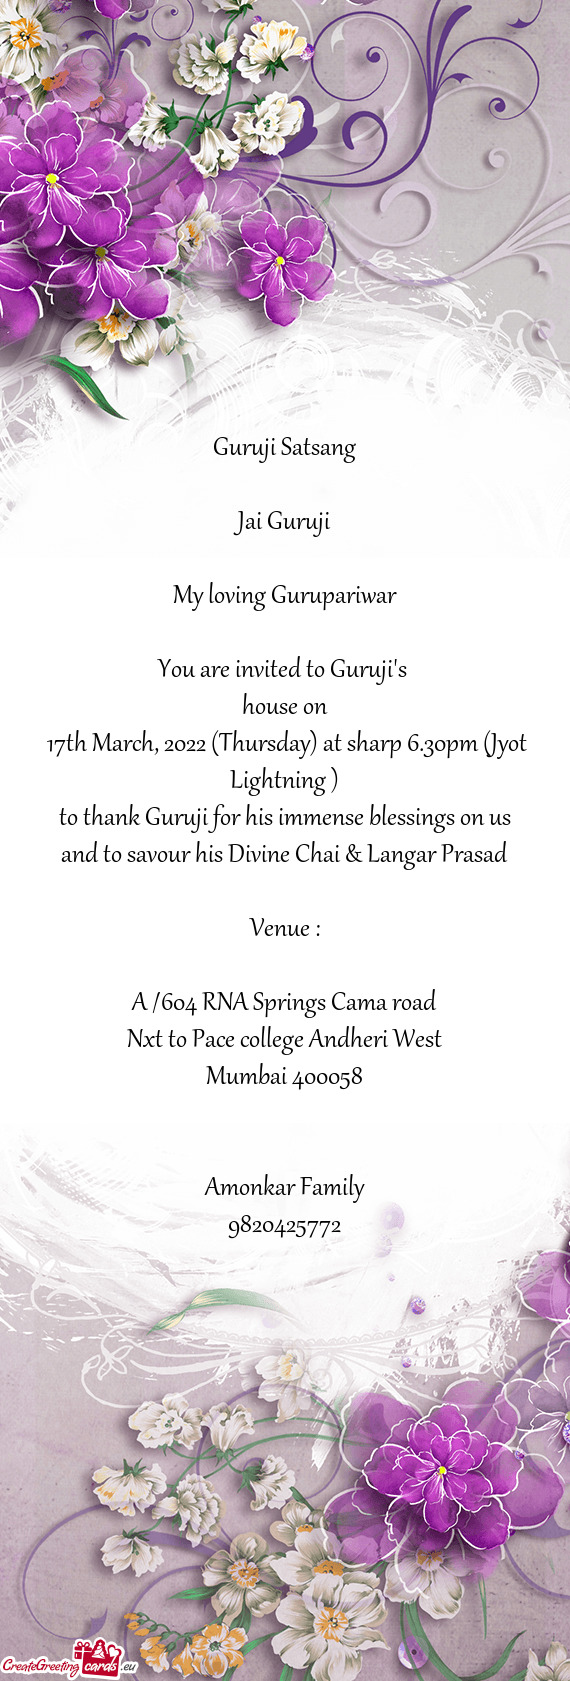 You are invited to Guruji